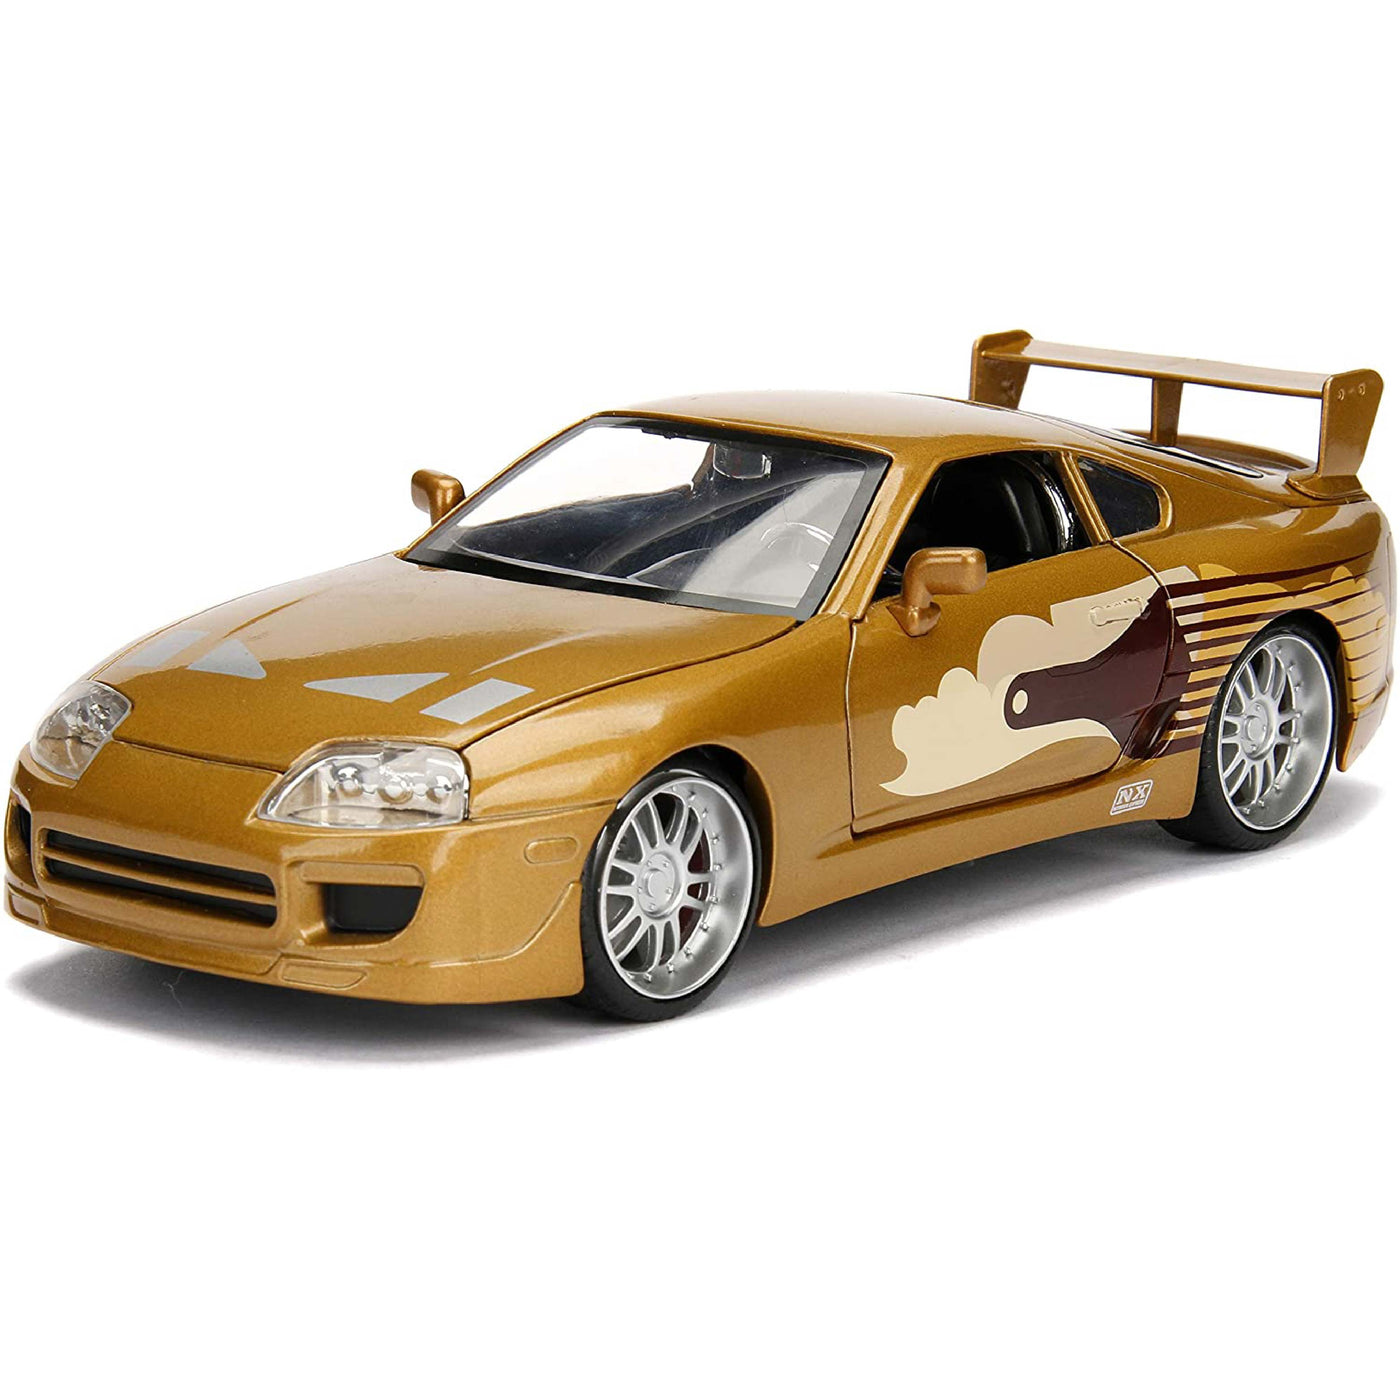  Jada Toys Fast & Furious 1:24 Brian's Toyota Supra Die